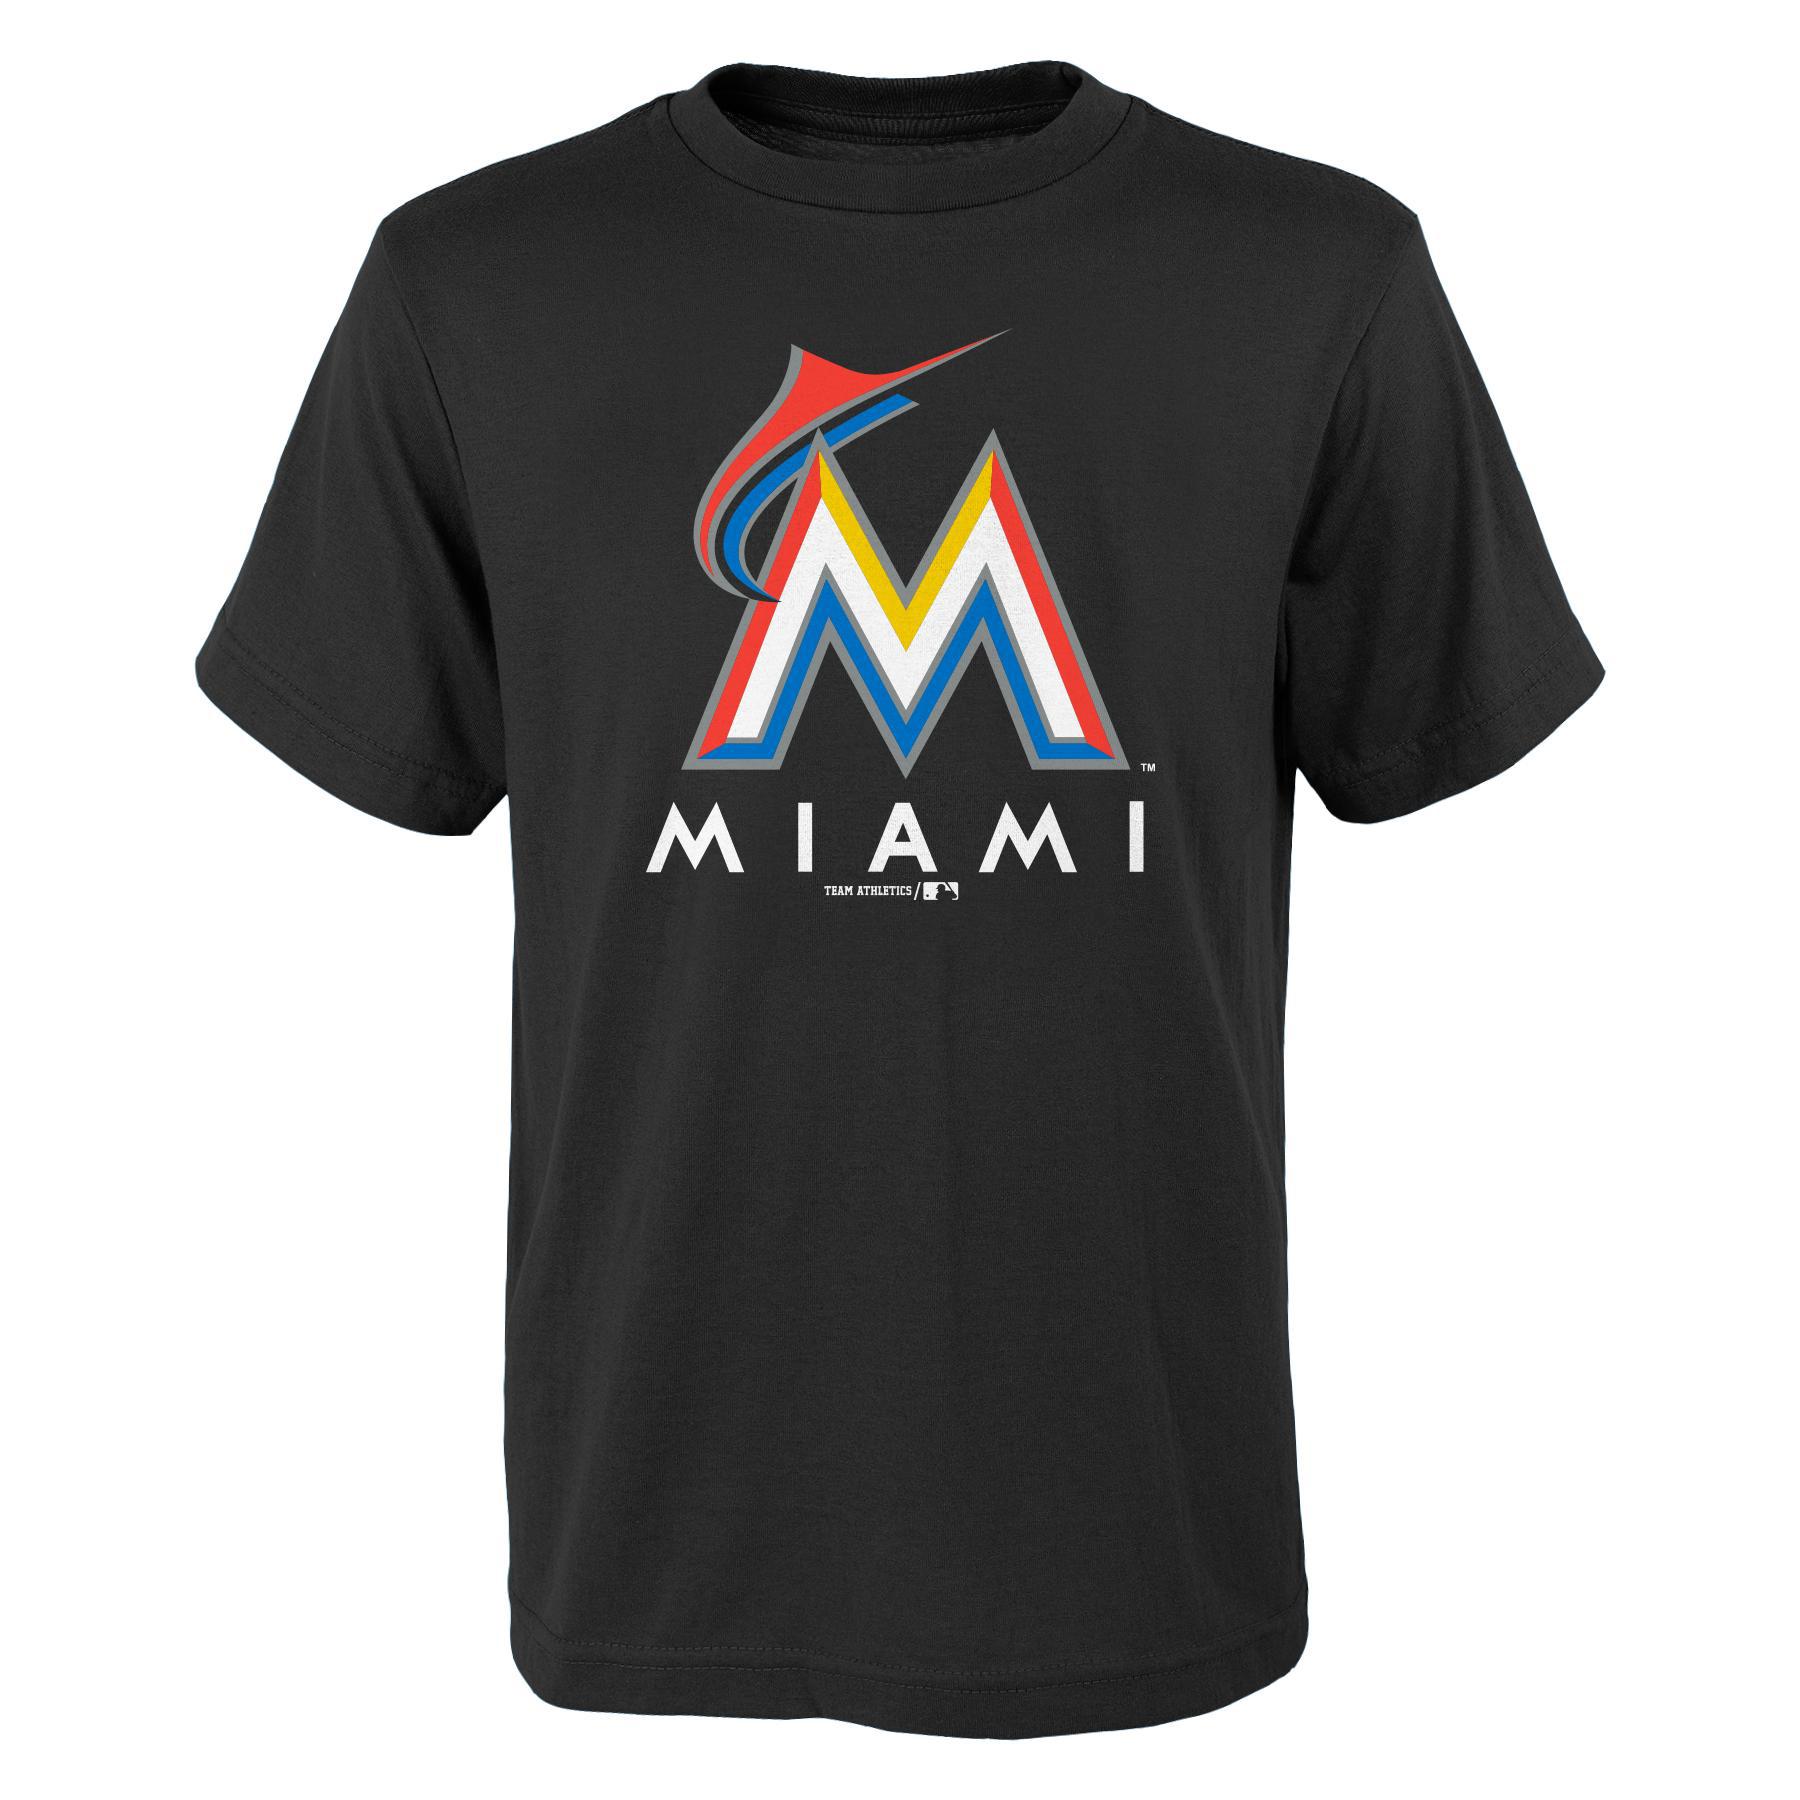 MLB Boy's Graphic T-Shirt - Miami Marlins